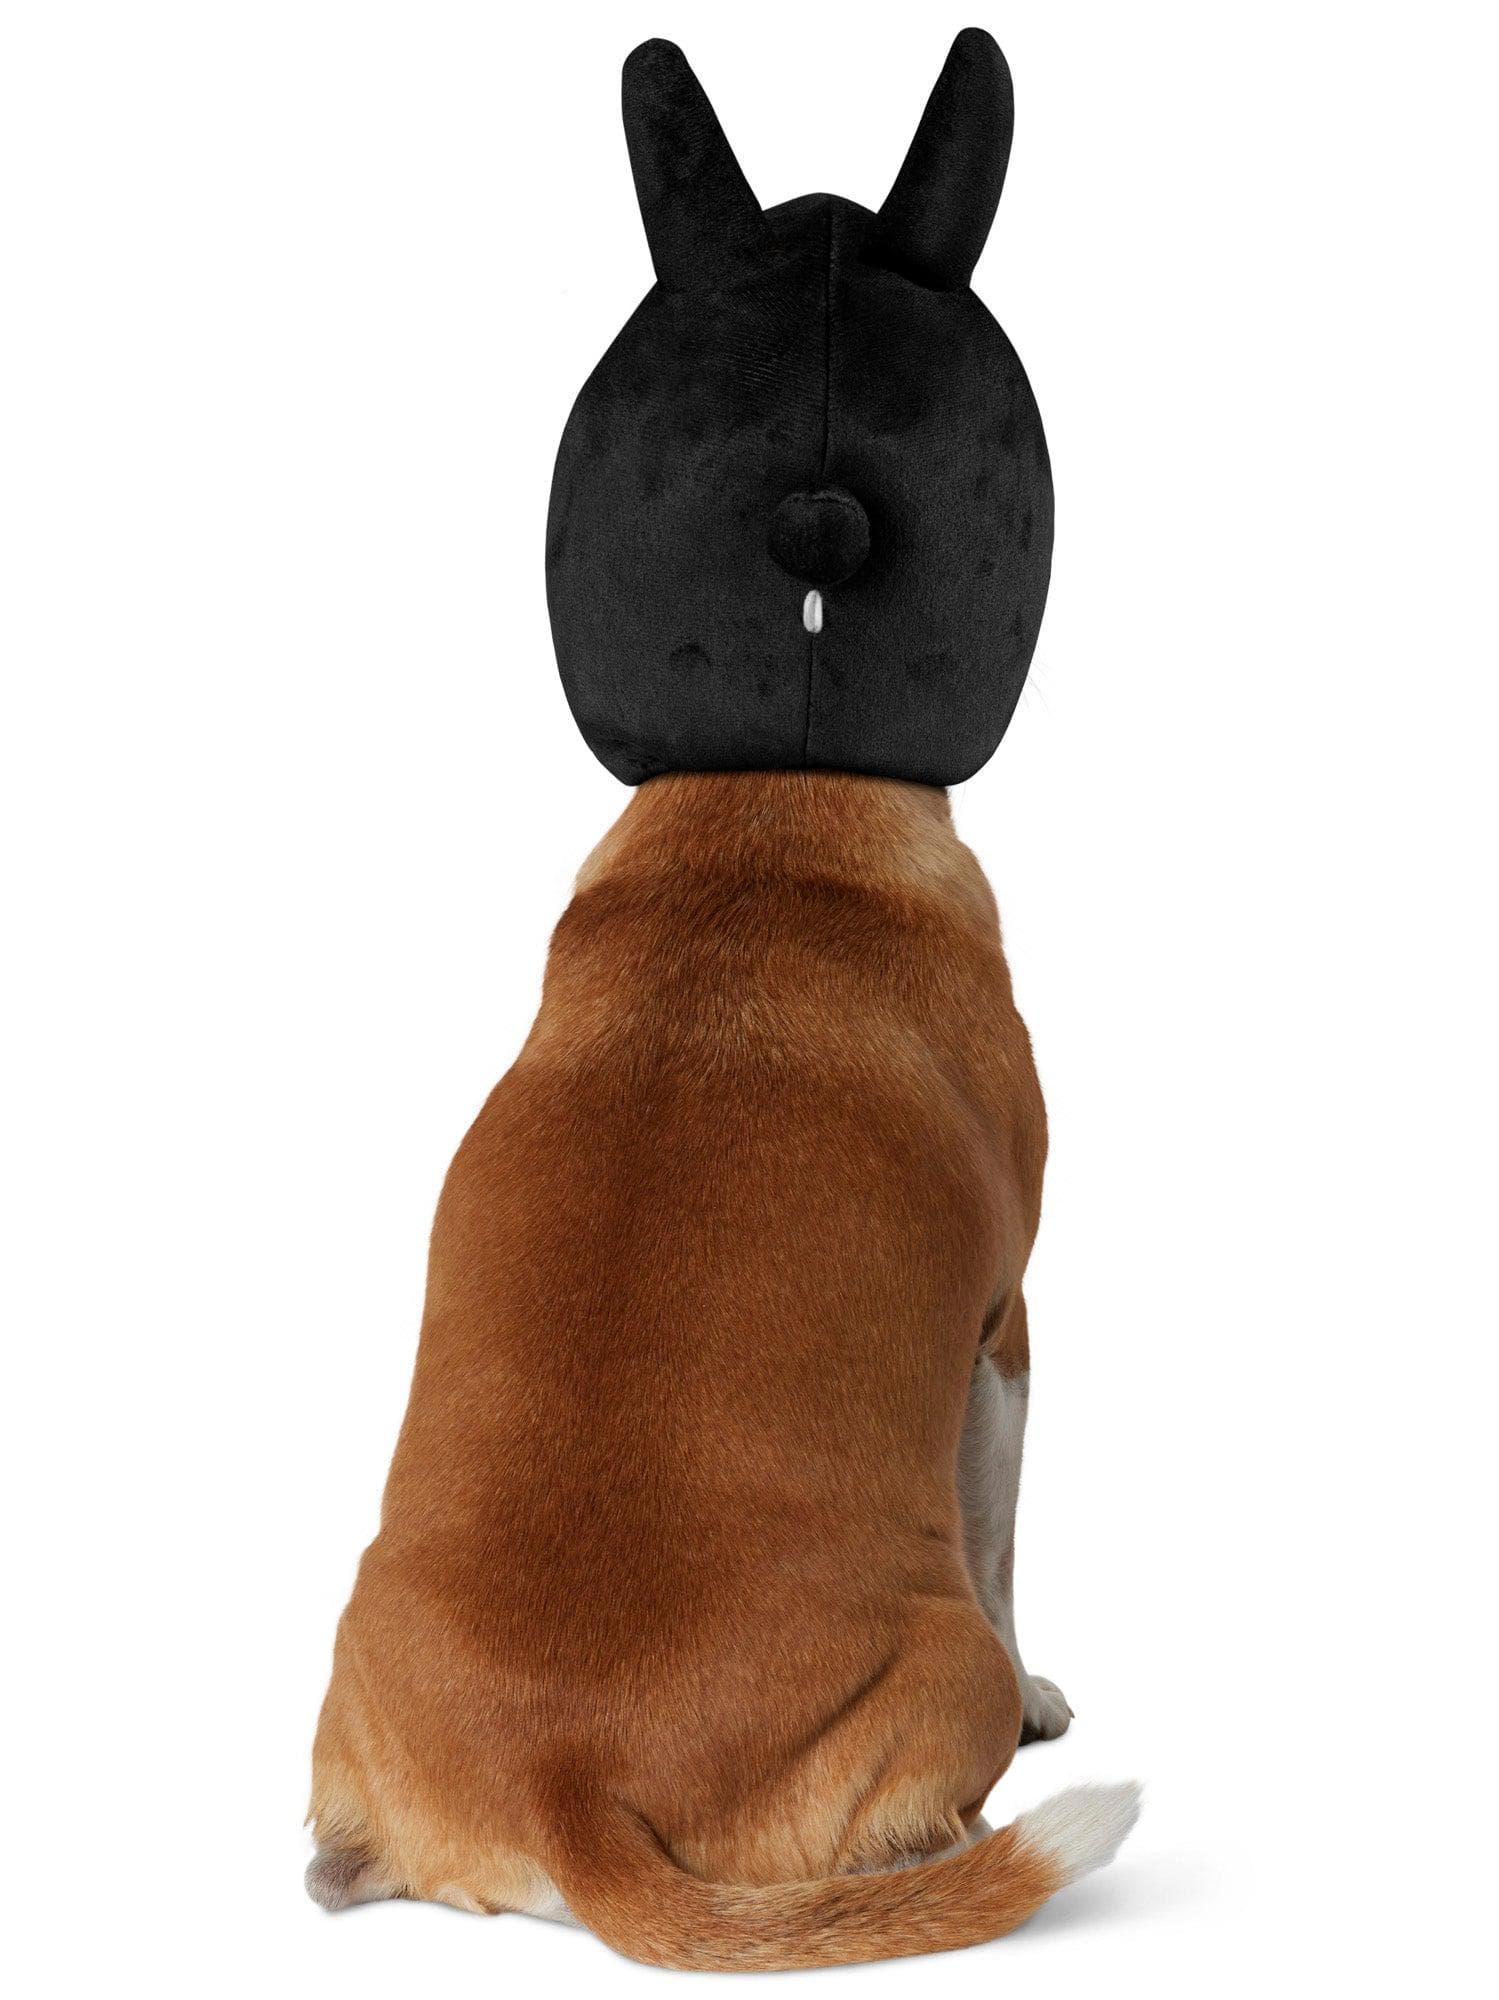 Black 'Stache Labbit Pet Headpiece by Kidrobot - costumes.com